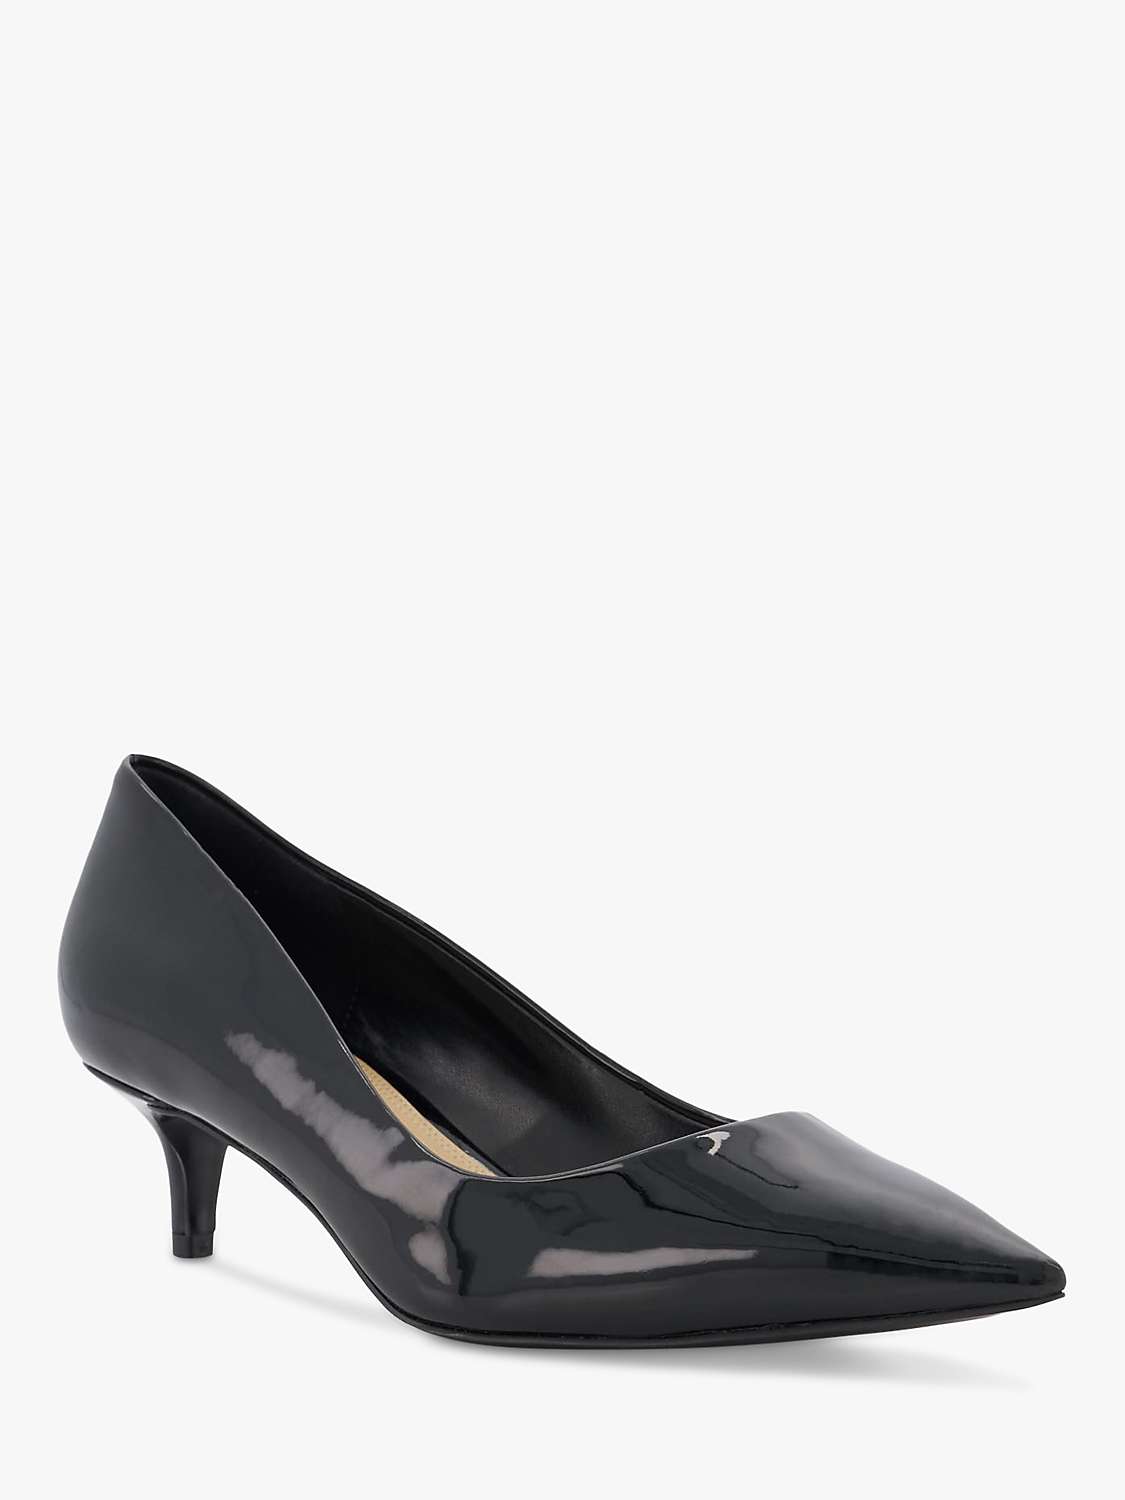 Dune Advanced Stiletto Heel Court Shoes, Black at John Lewis & Partners